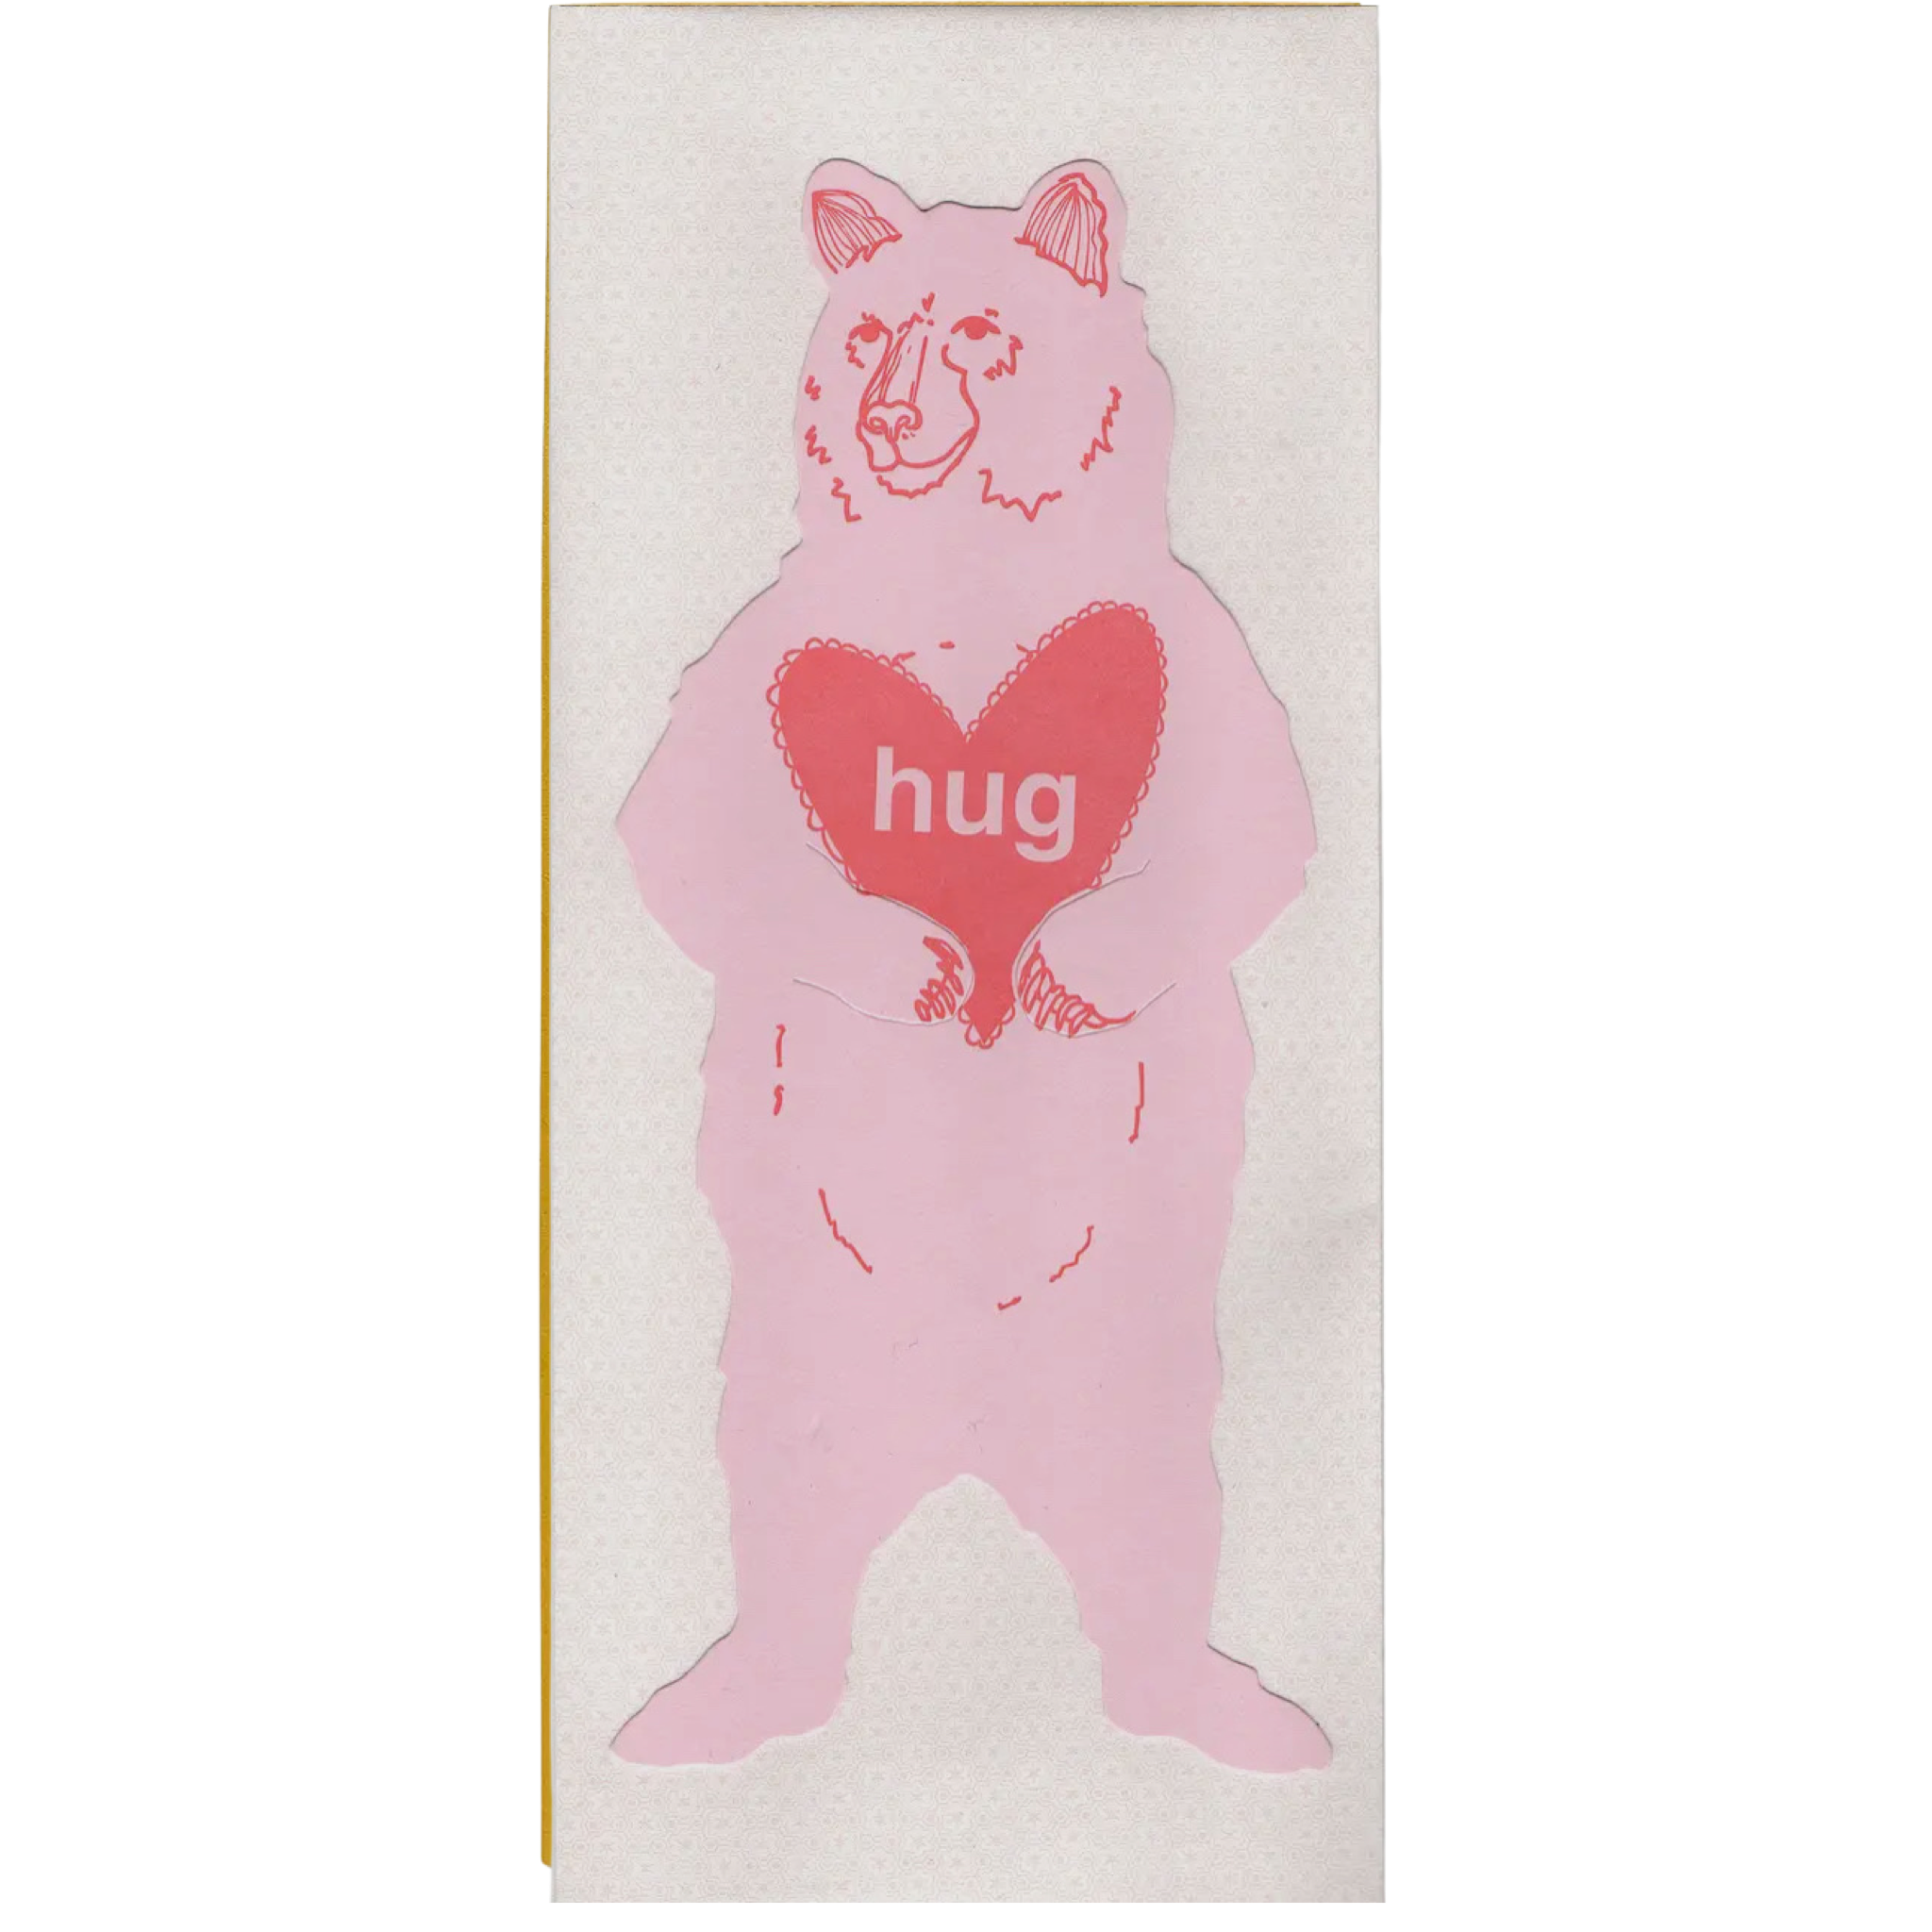 Bear Hug greeting card